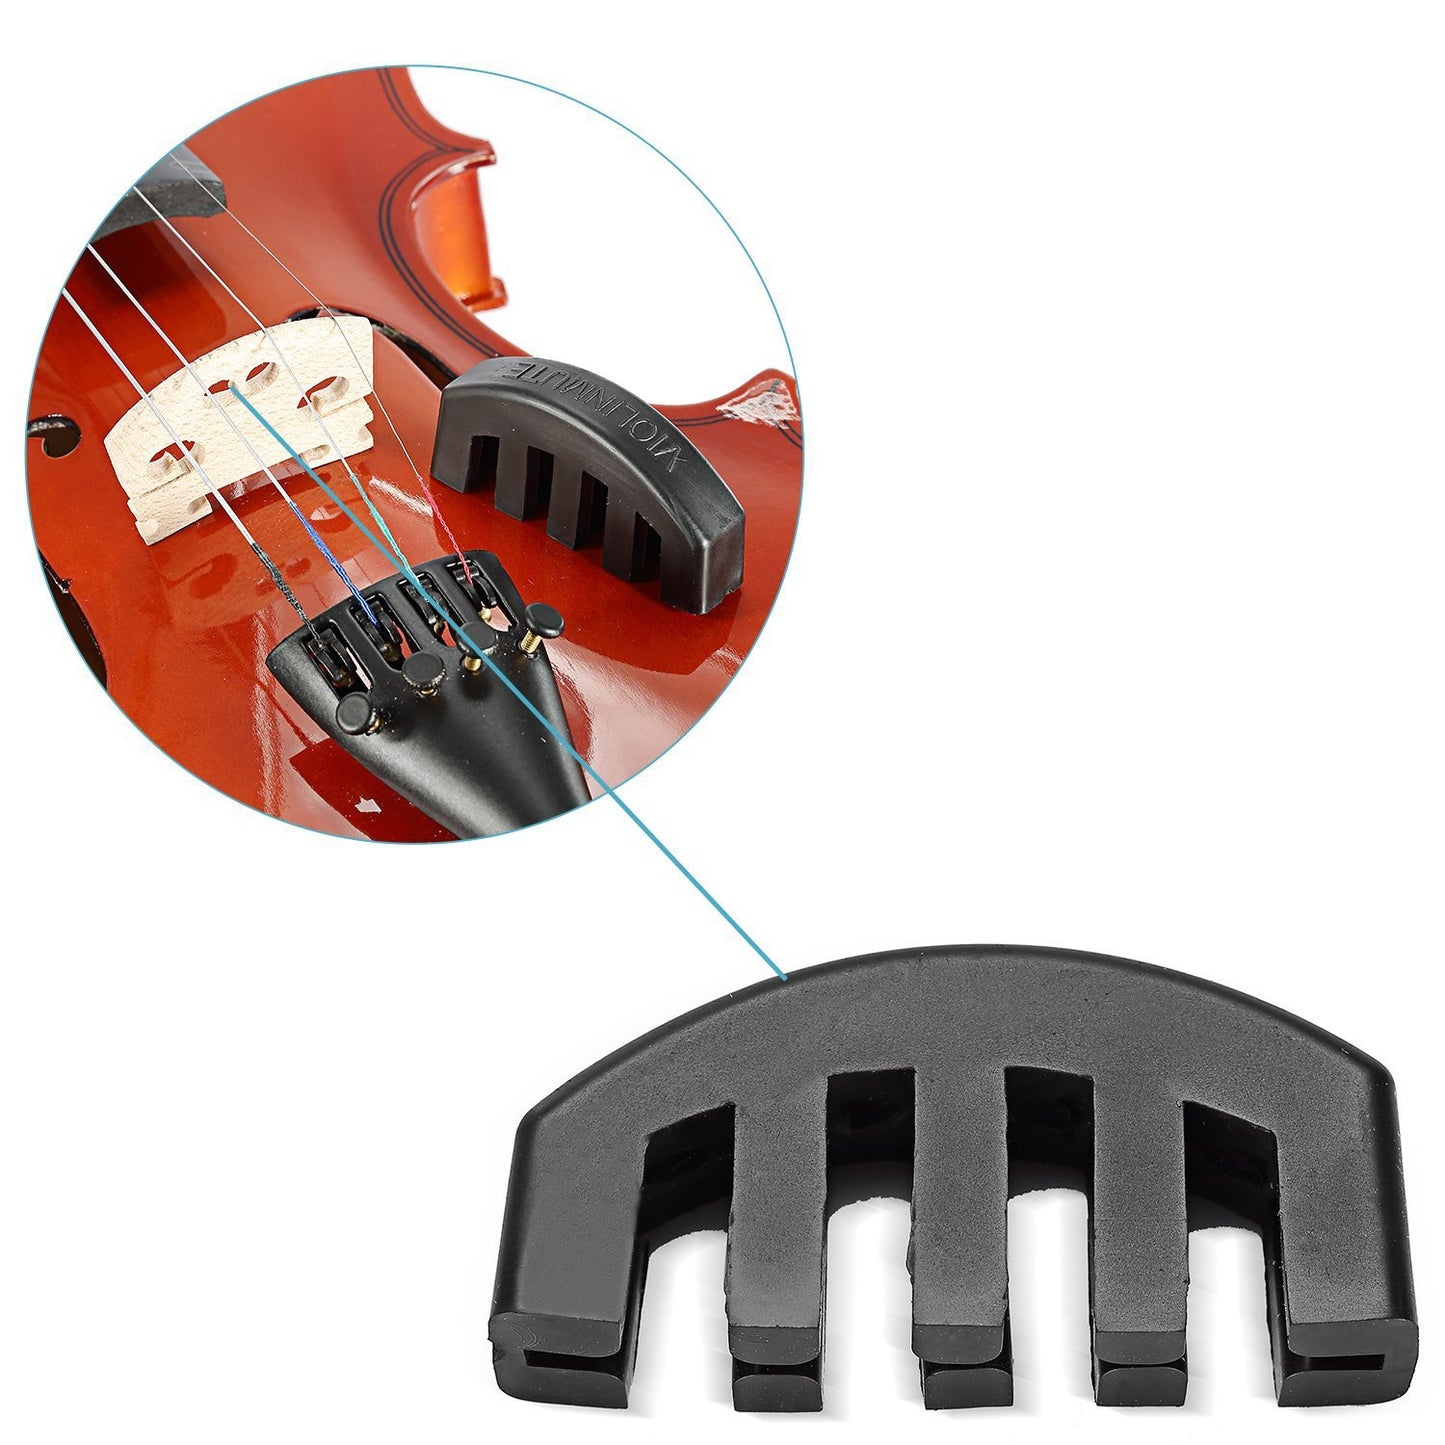 Violin Sourdine Violin Special Accessories Rubber Microphone